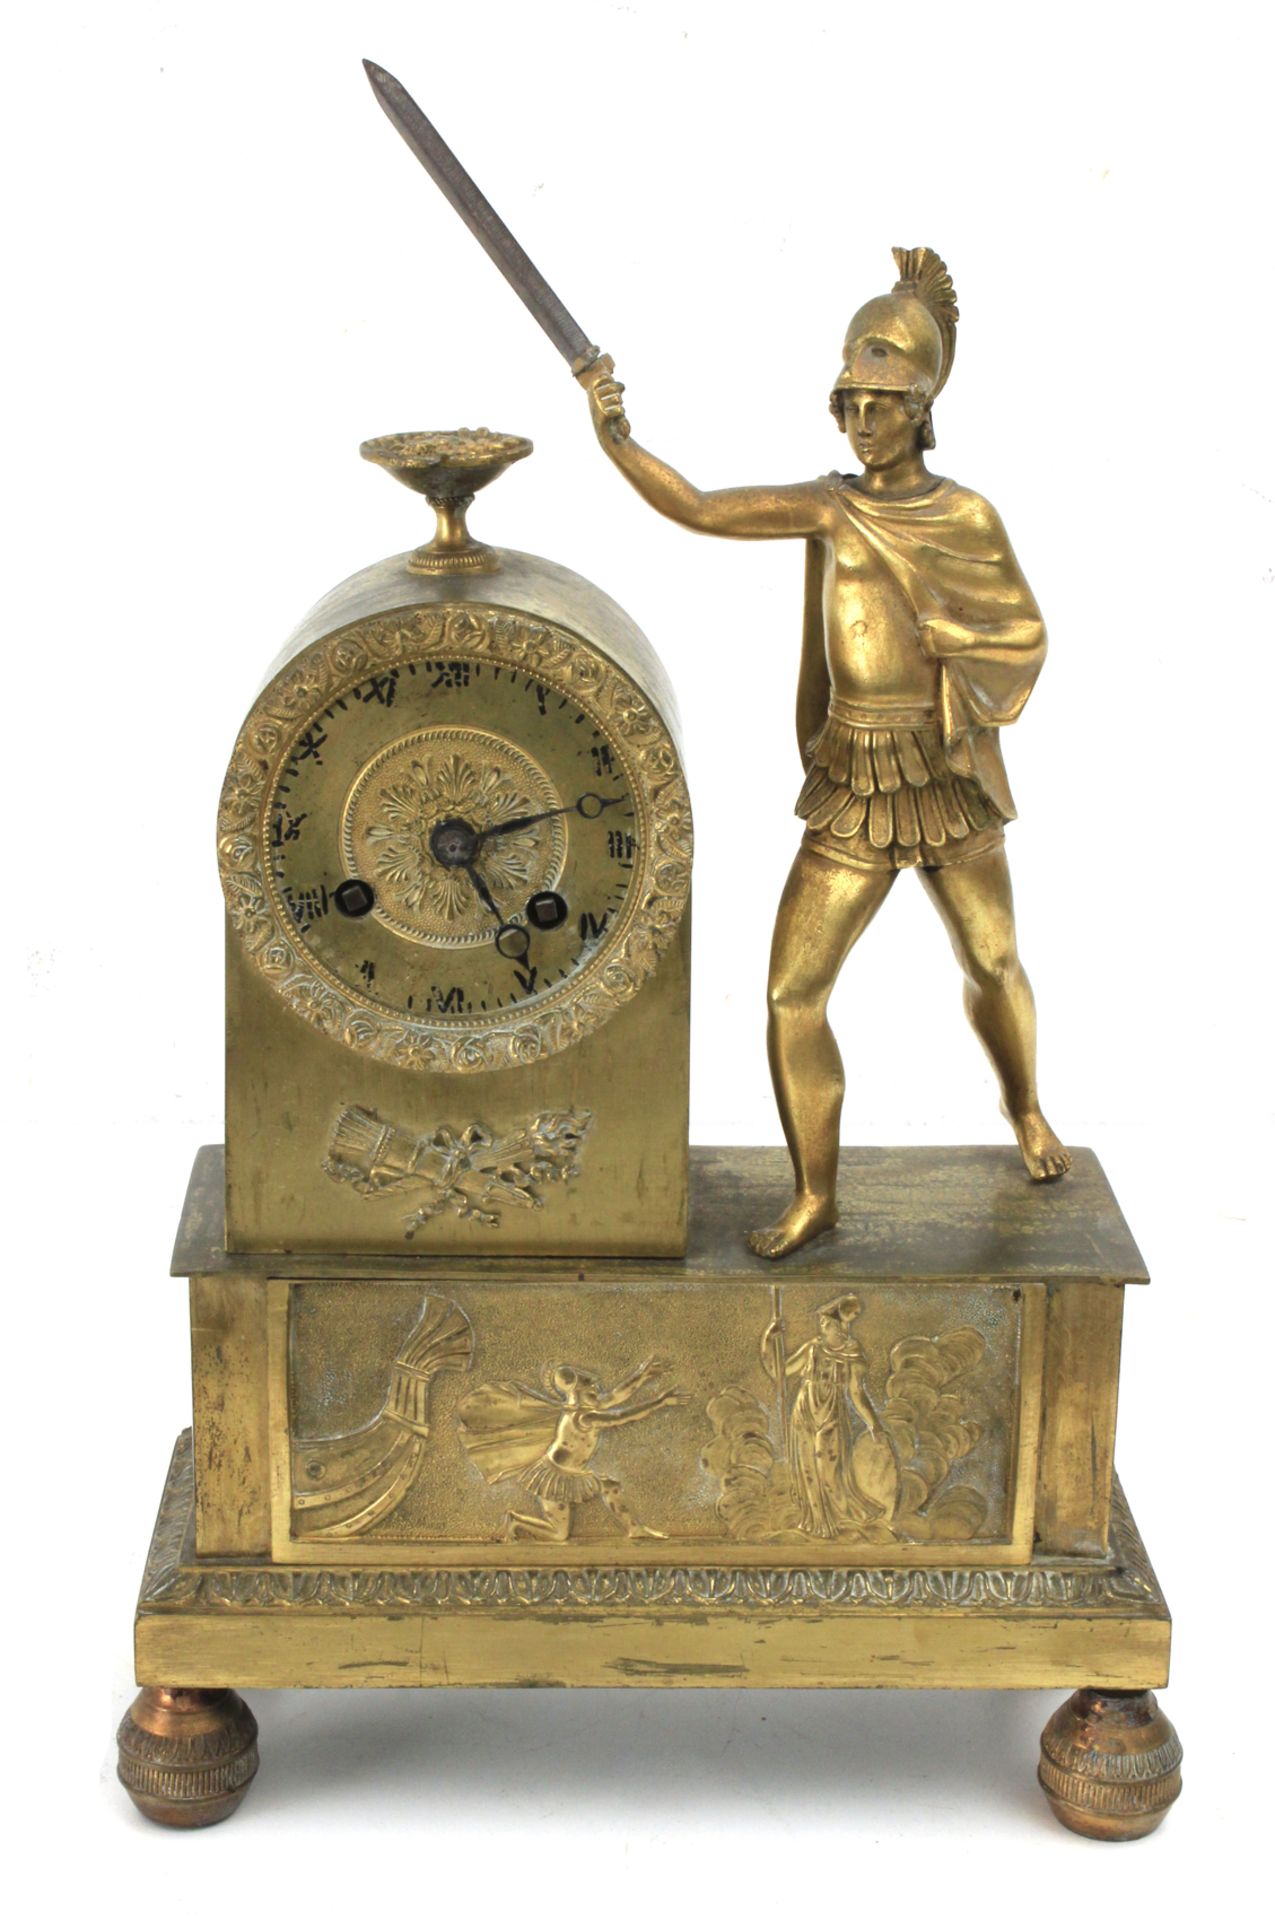 A 19th century French ormolú bronze mantel clock from Empire period